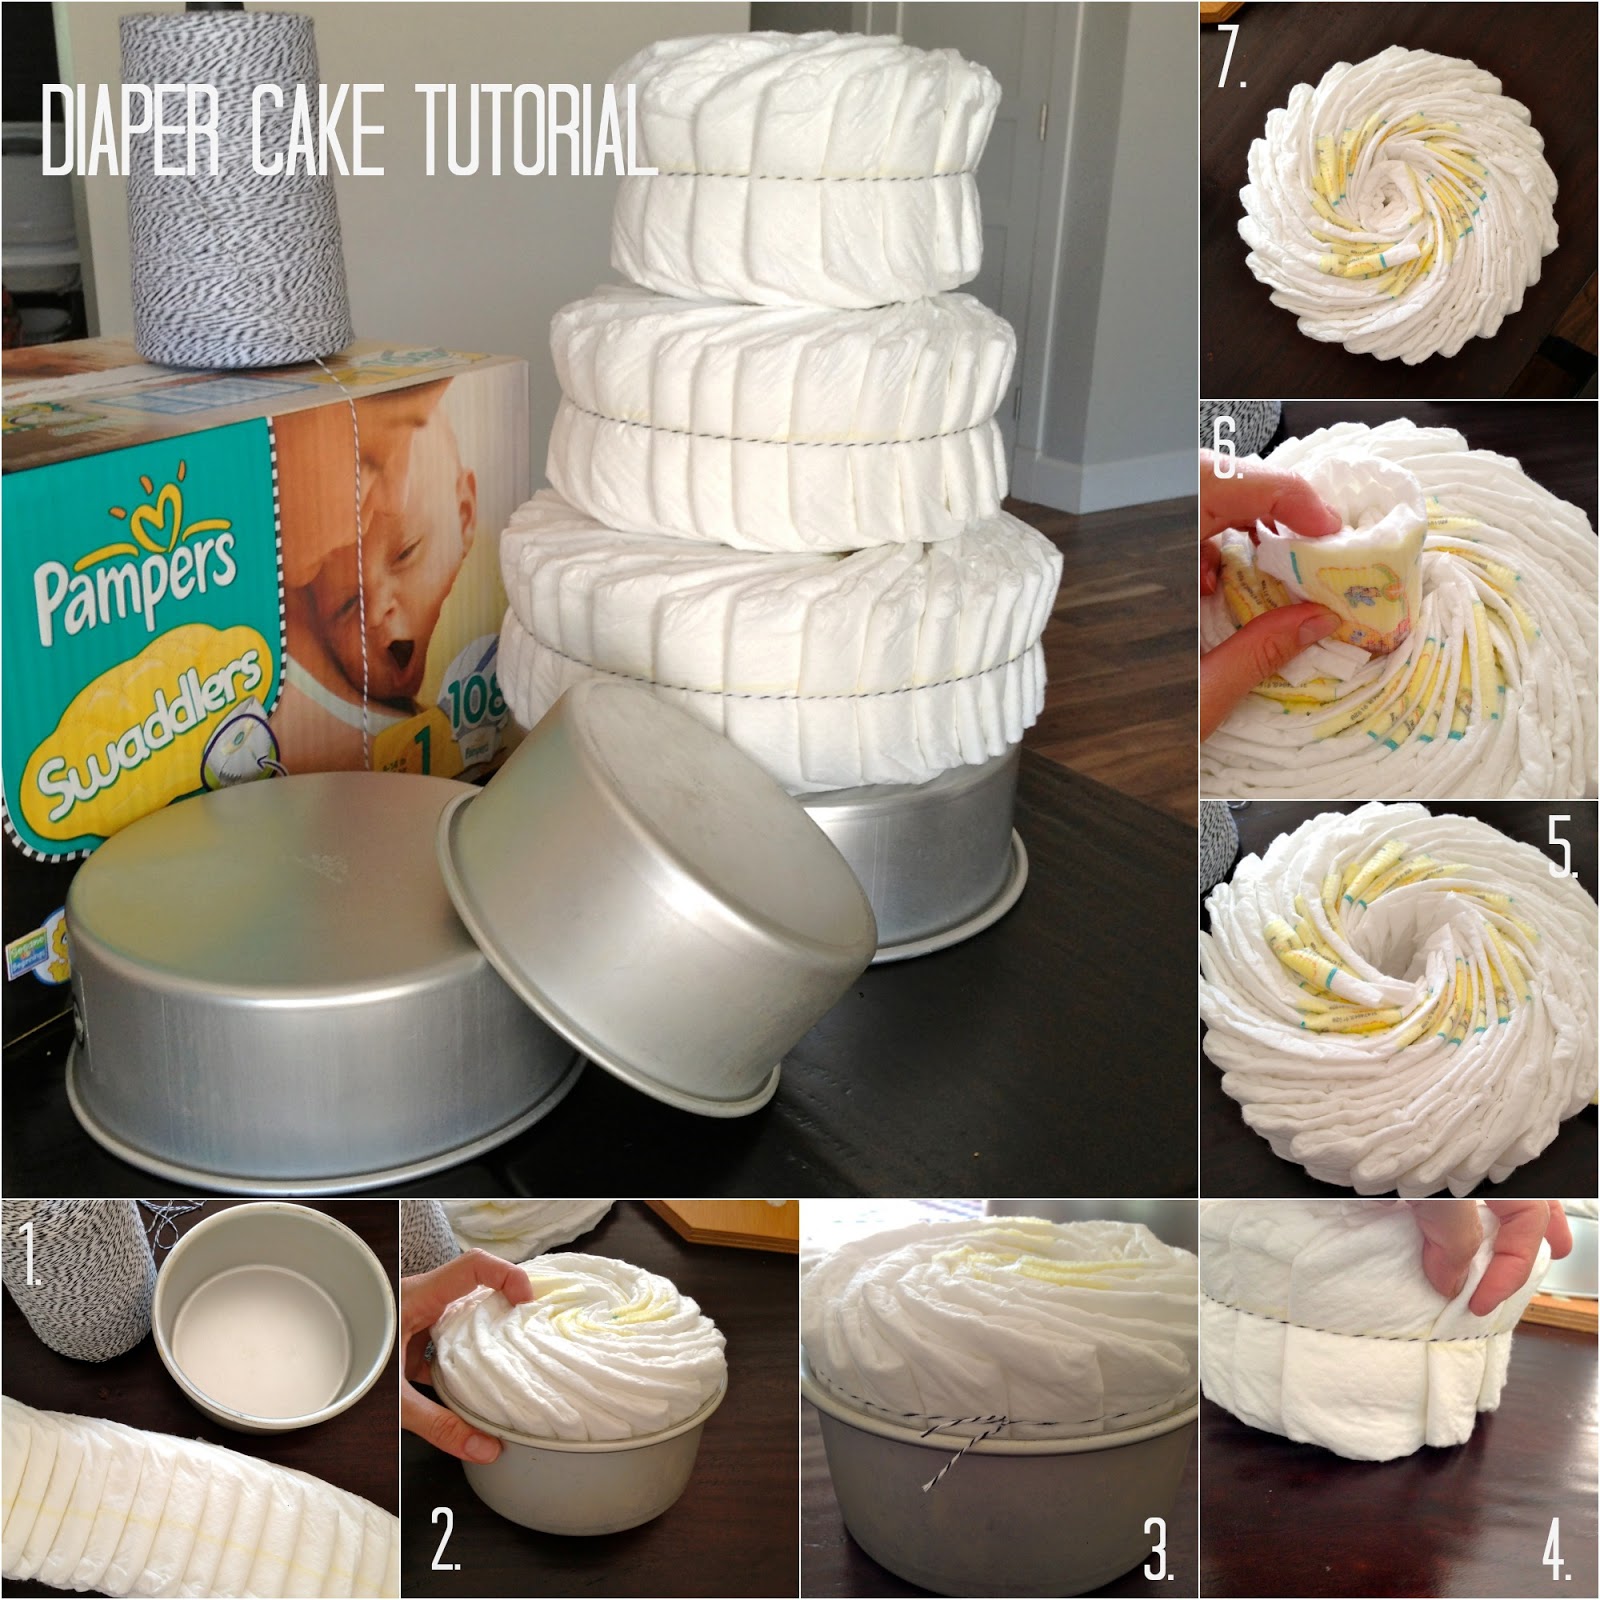 Domestic Charm: Diaper Cake Tutorial | atelier-yuwa.ciao.jp